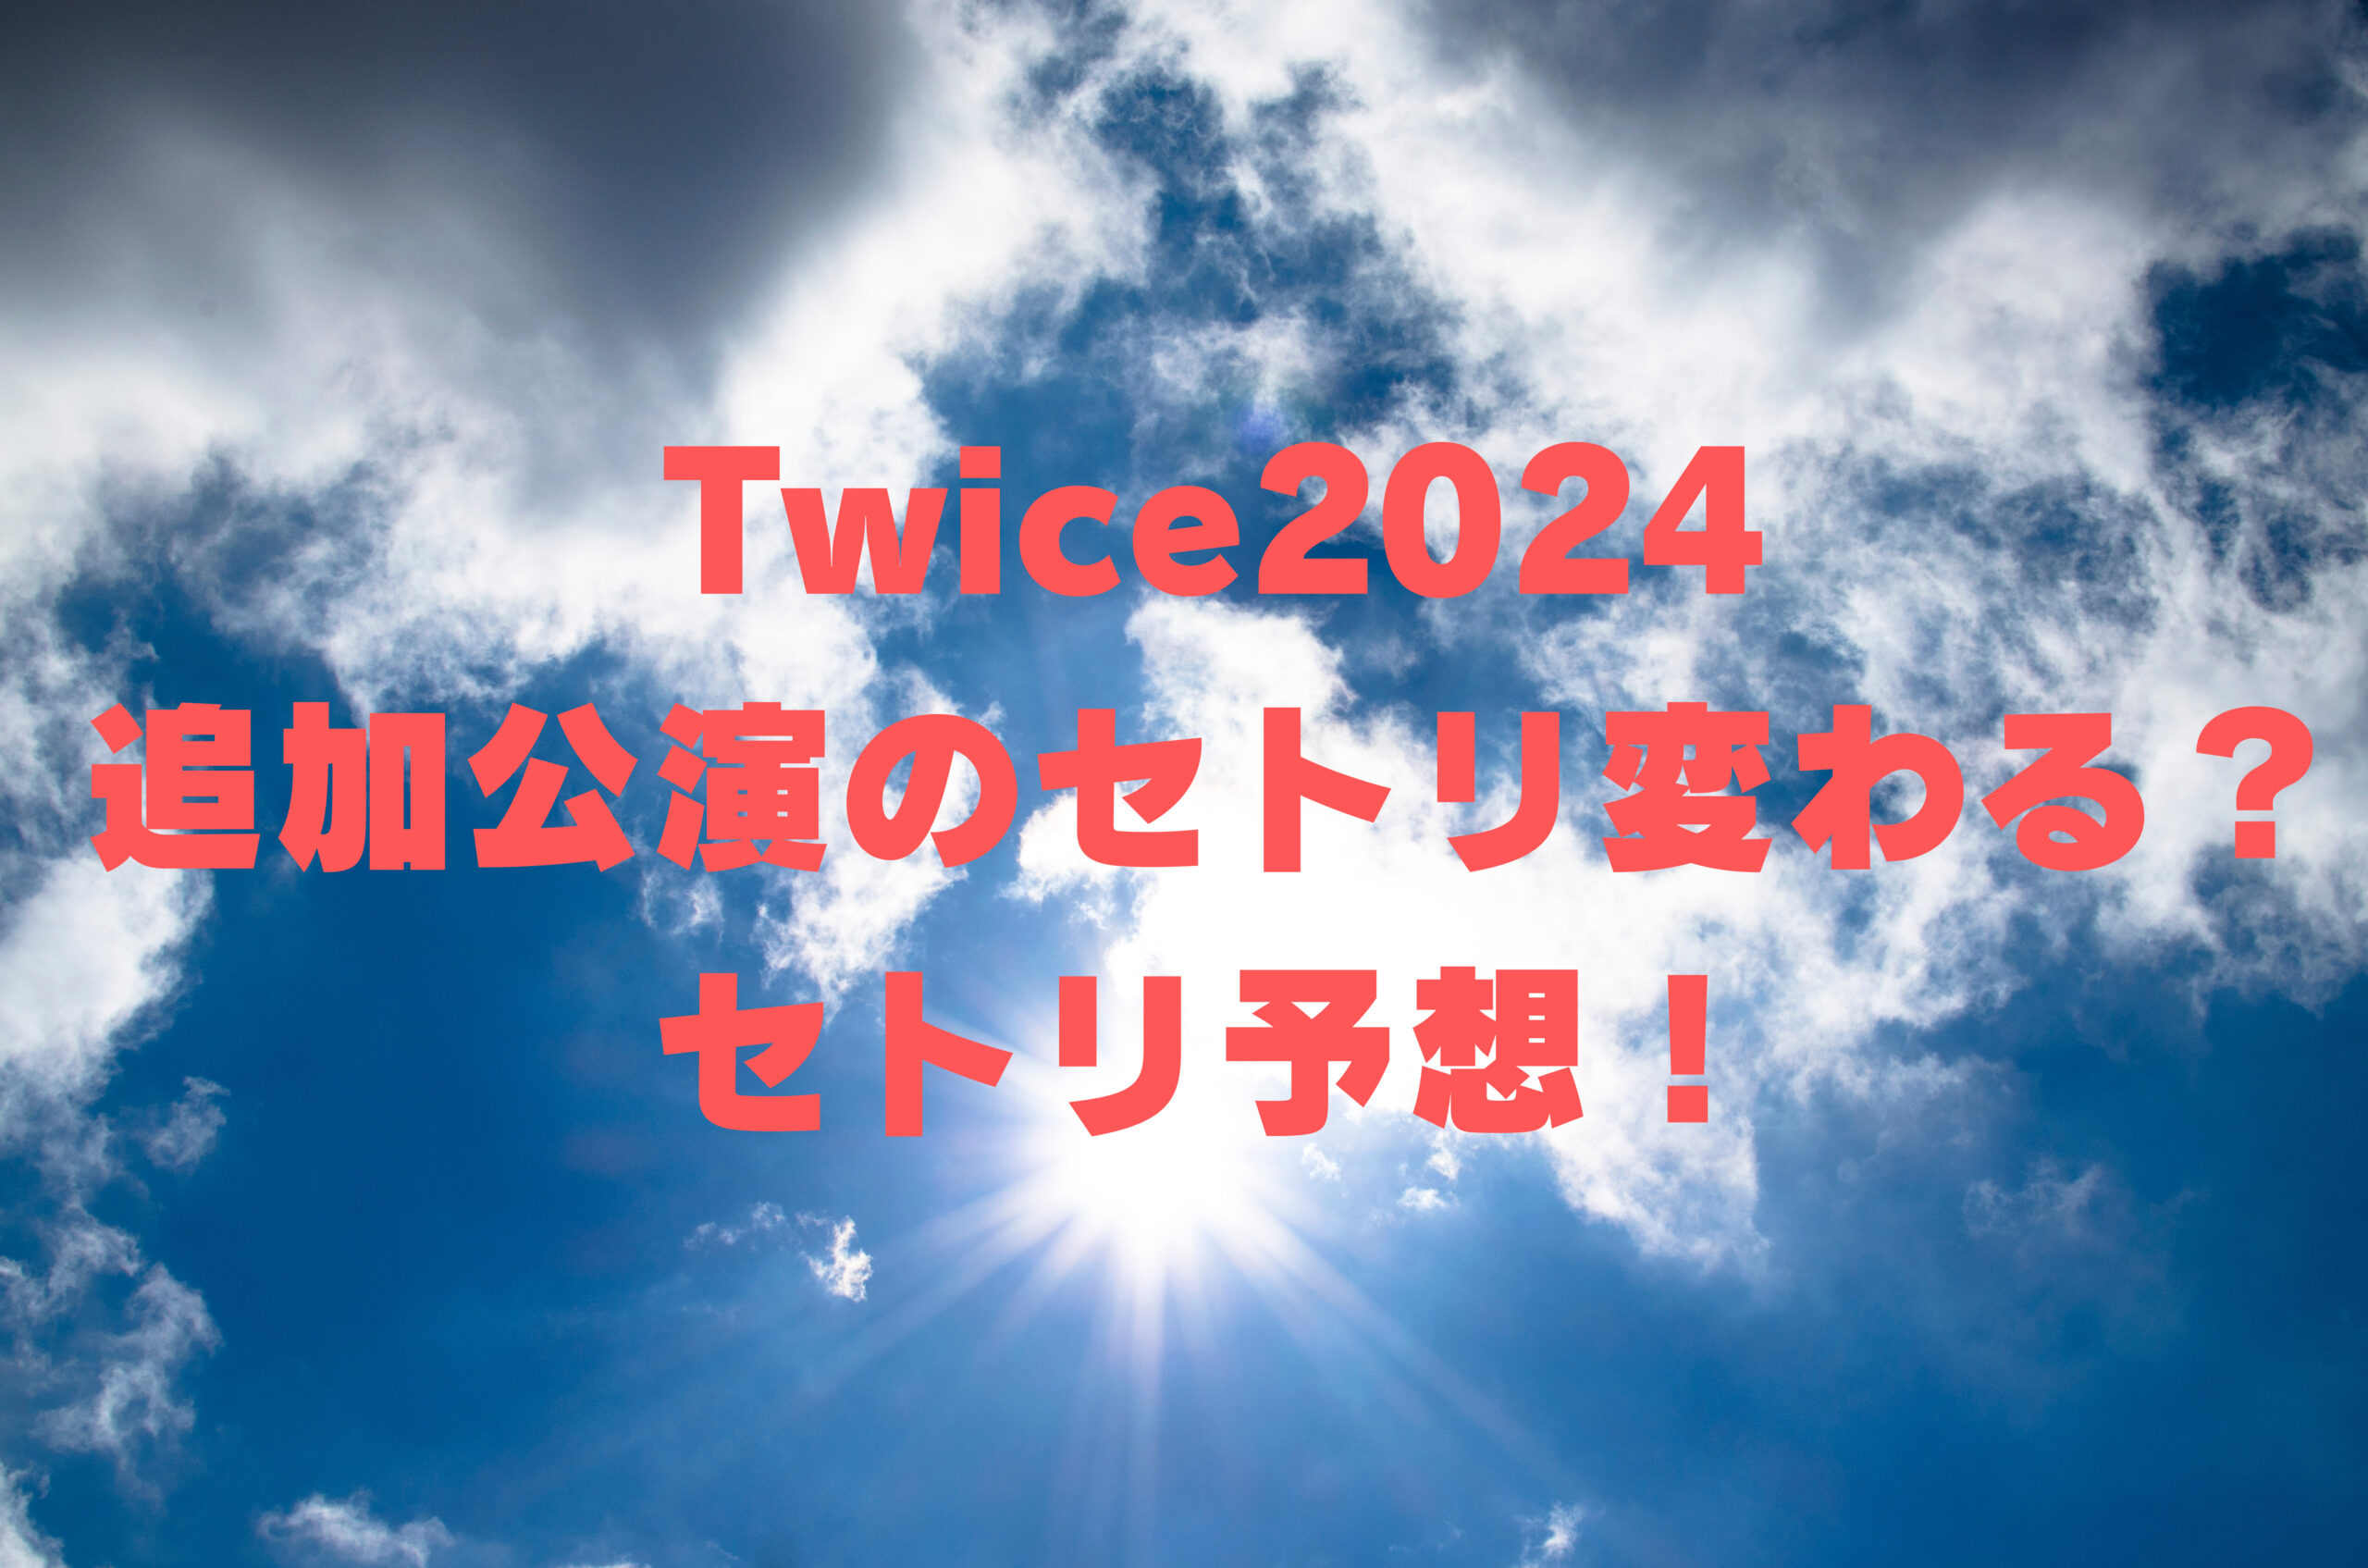 Twice2024追加公演のセトリ変わる？セトリ予想！